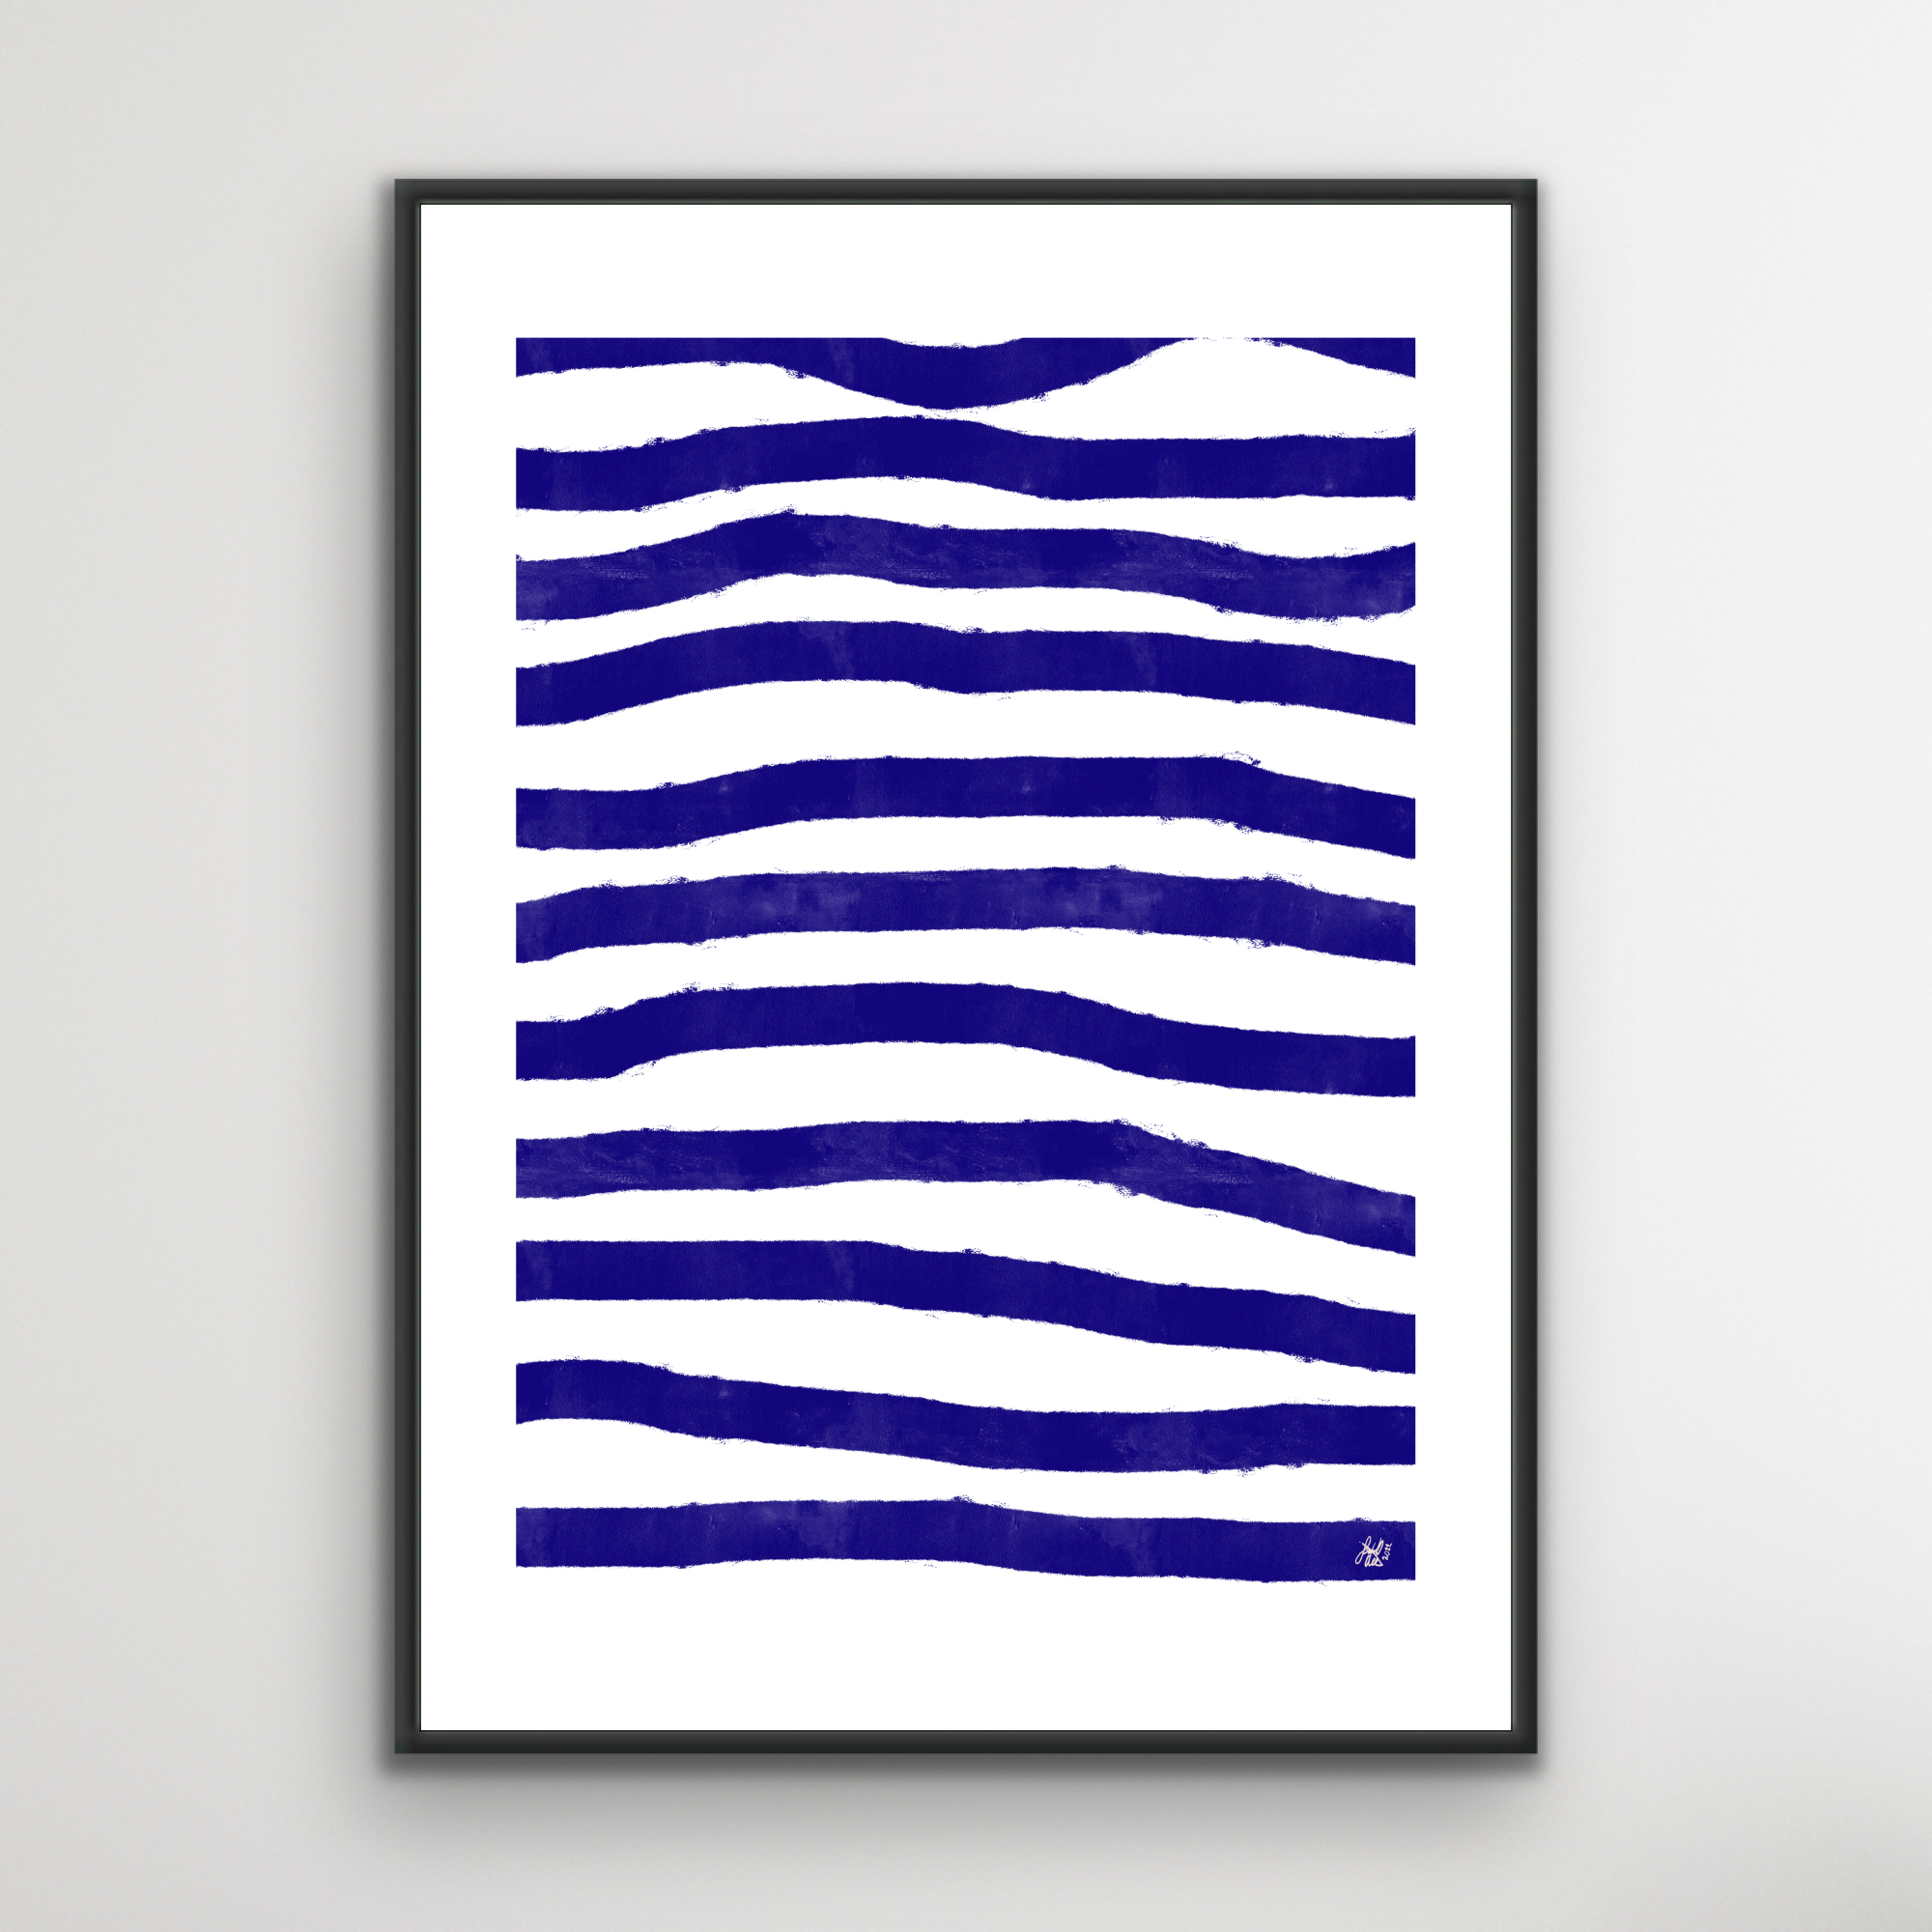 Poster: "Blue Stripes"